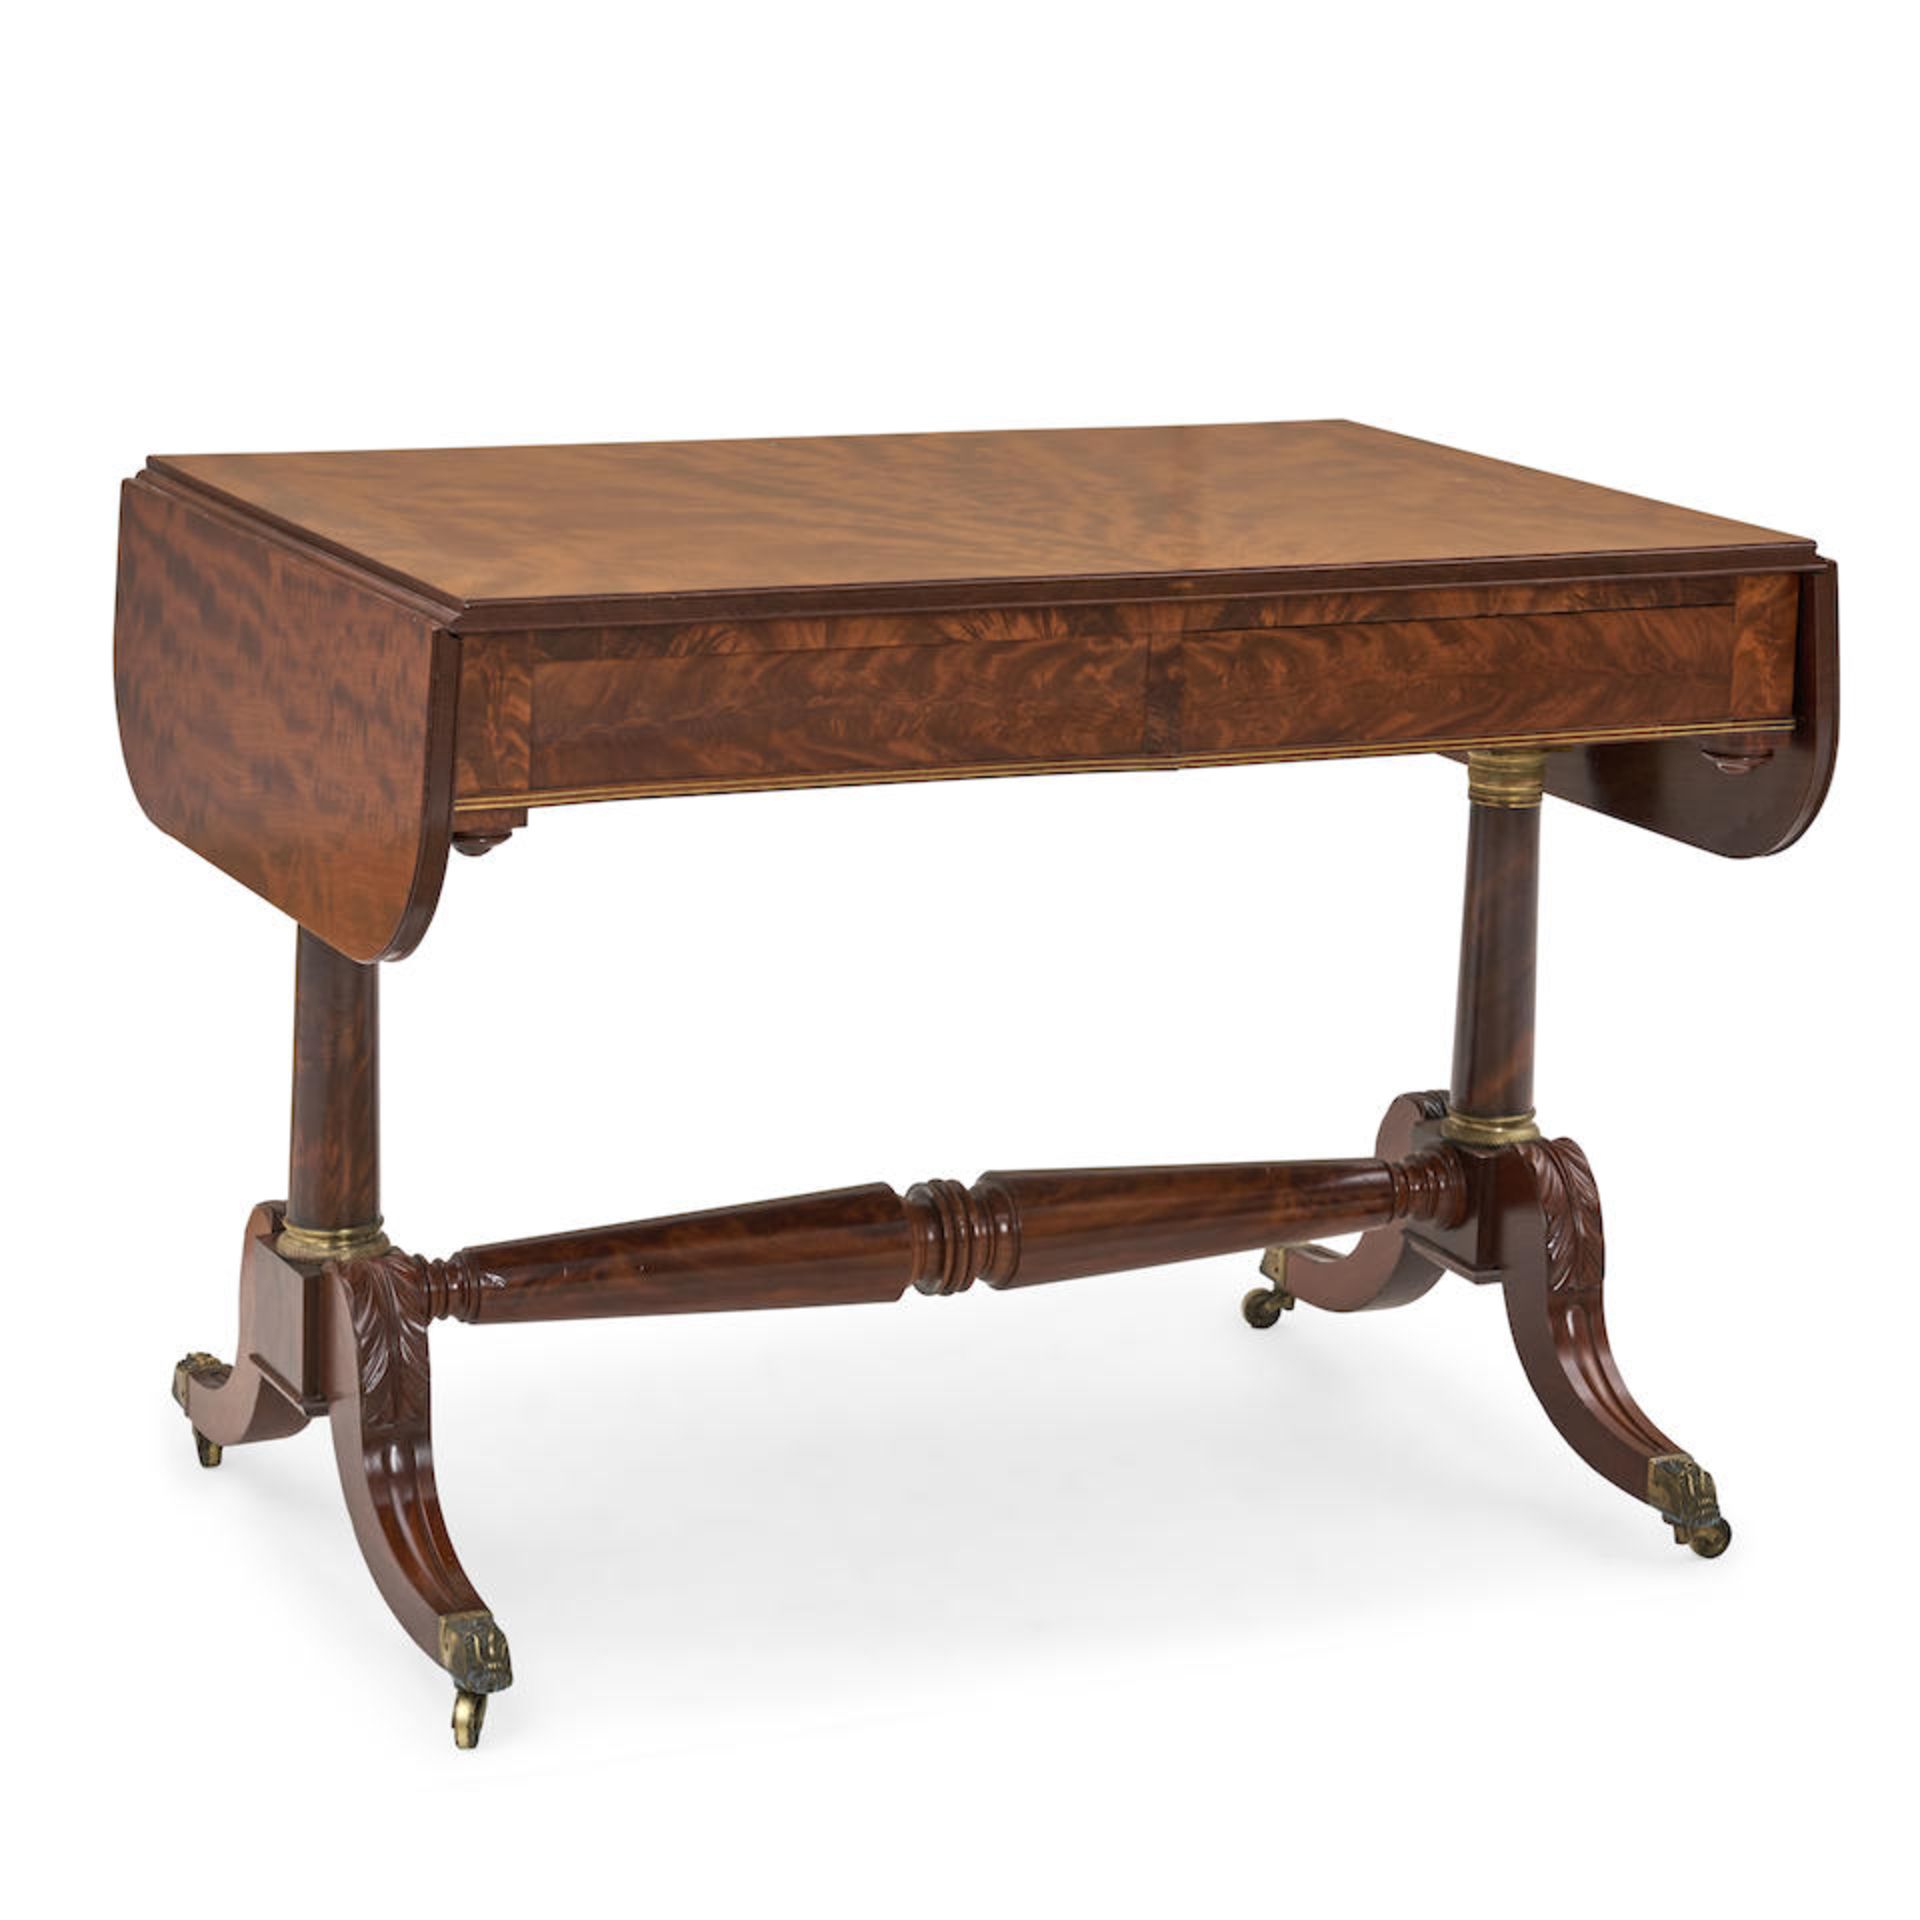 Classical Mahogany and Mahogany-veneered Cherry Sofa Table, attributed to Duncan Phyfe (1770-185... - Image 2 of 2